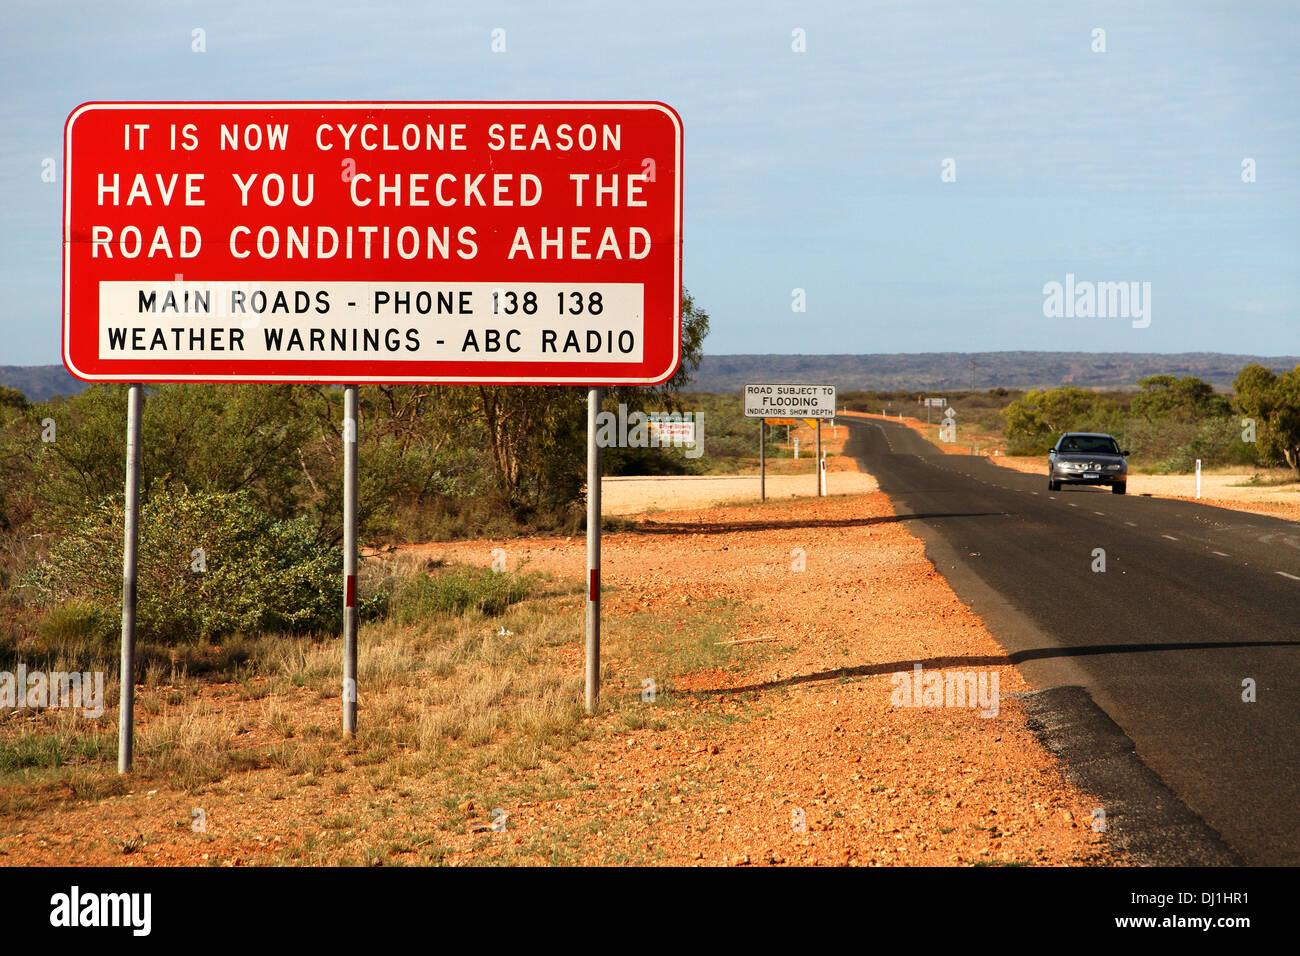 Cyclone season road warning sign, Exmouth Western Australia Stock Photo